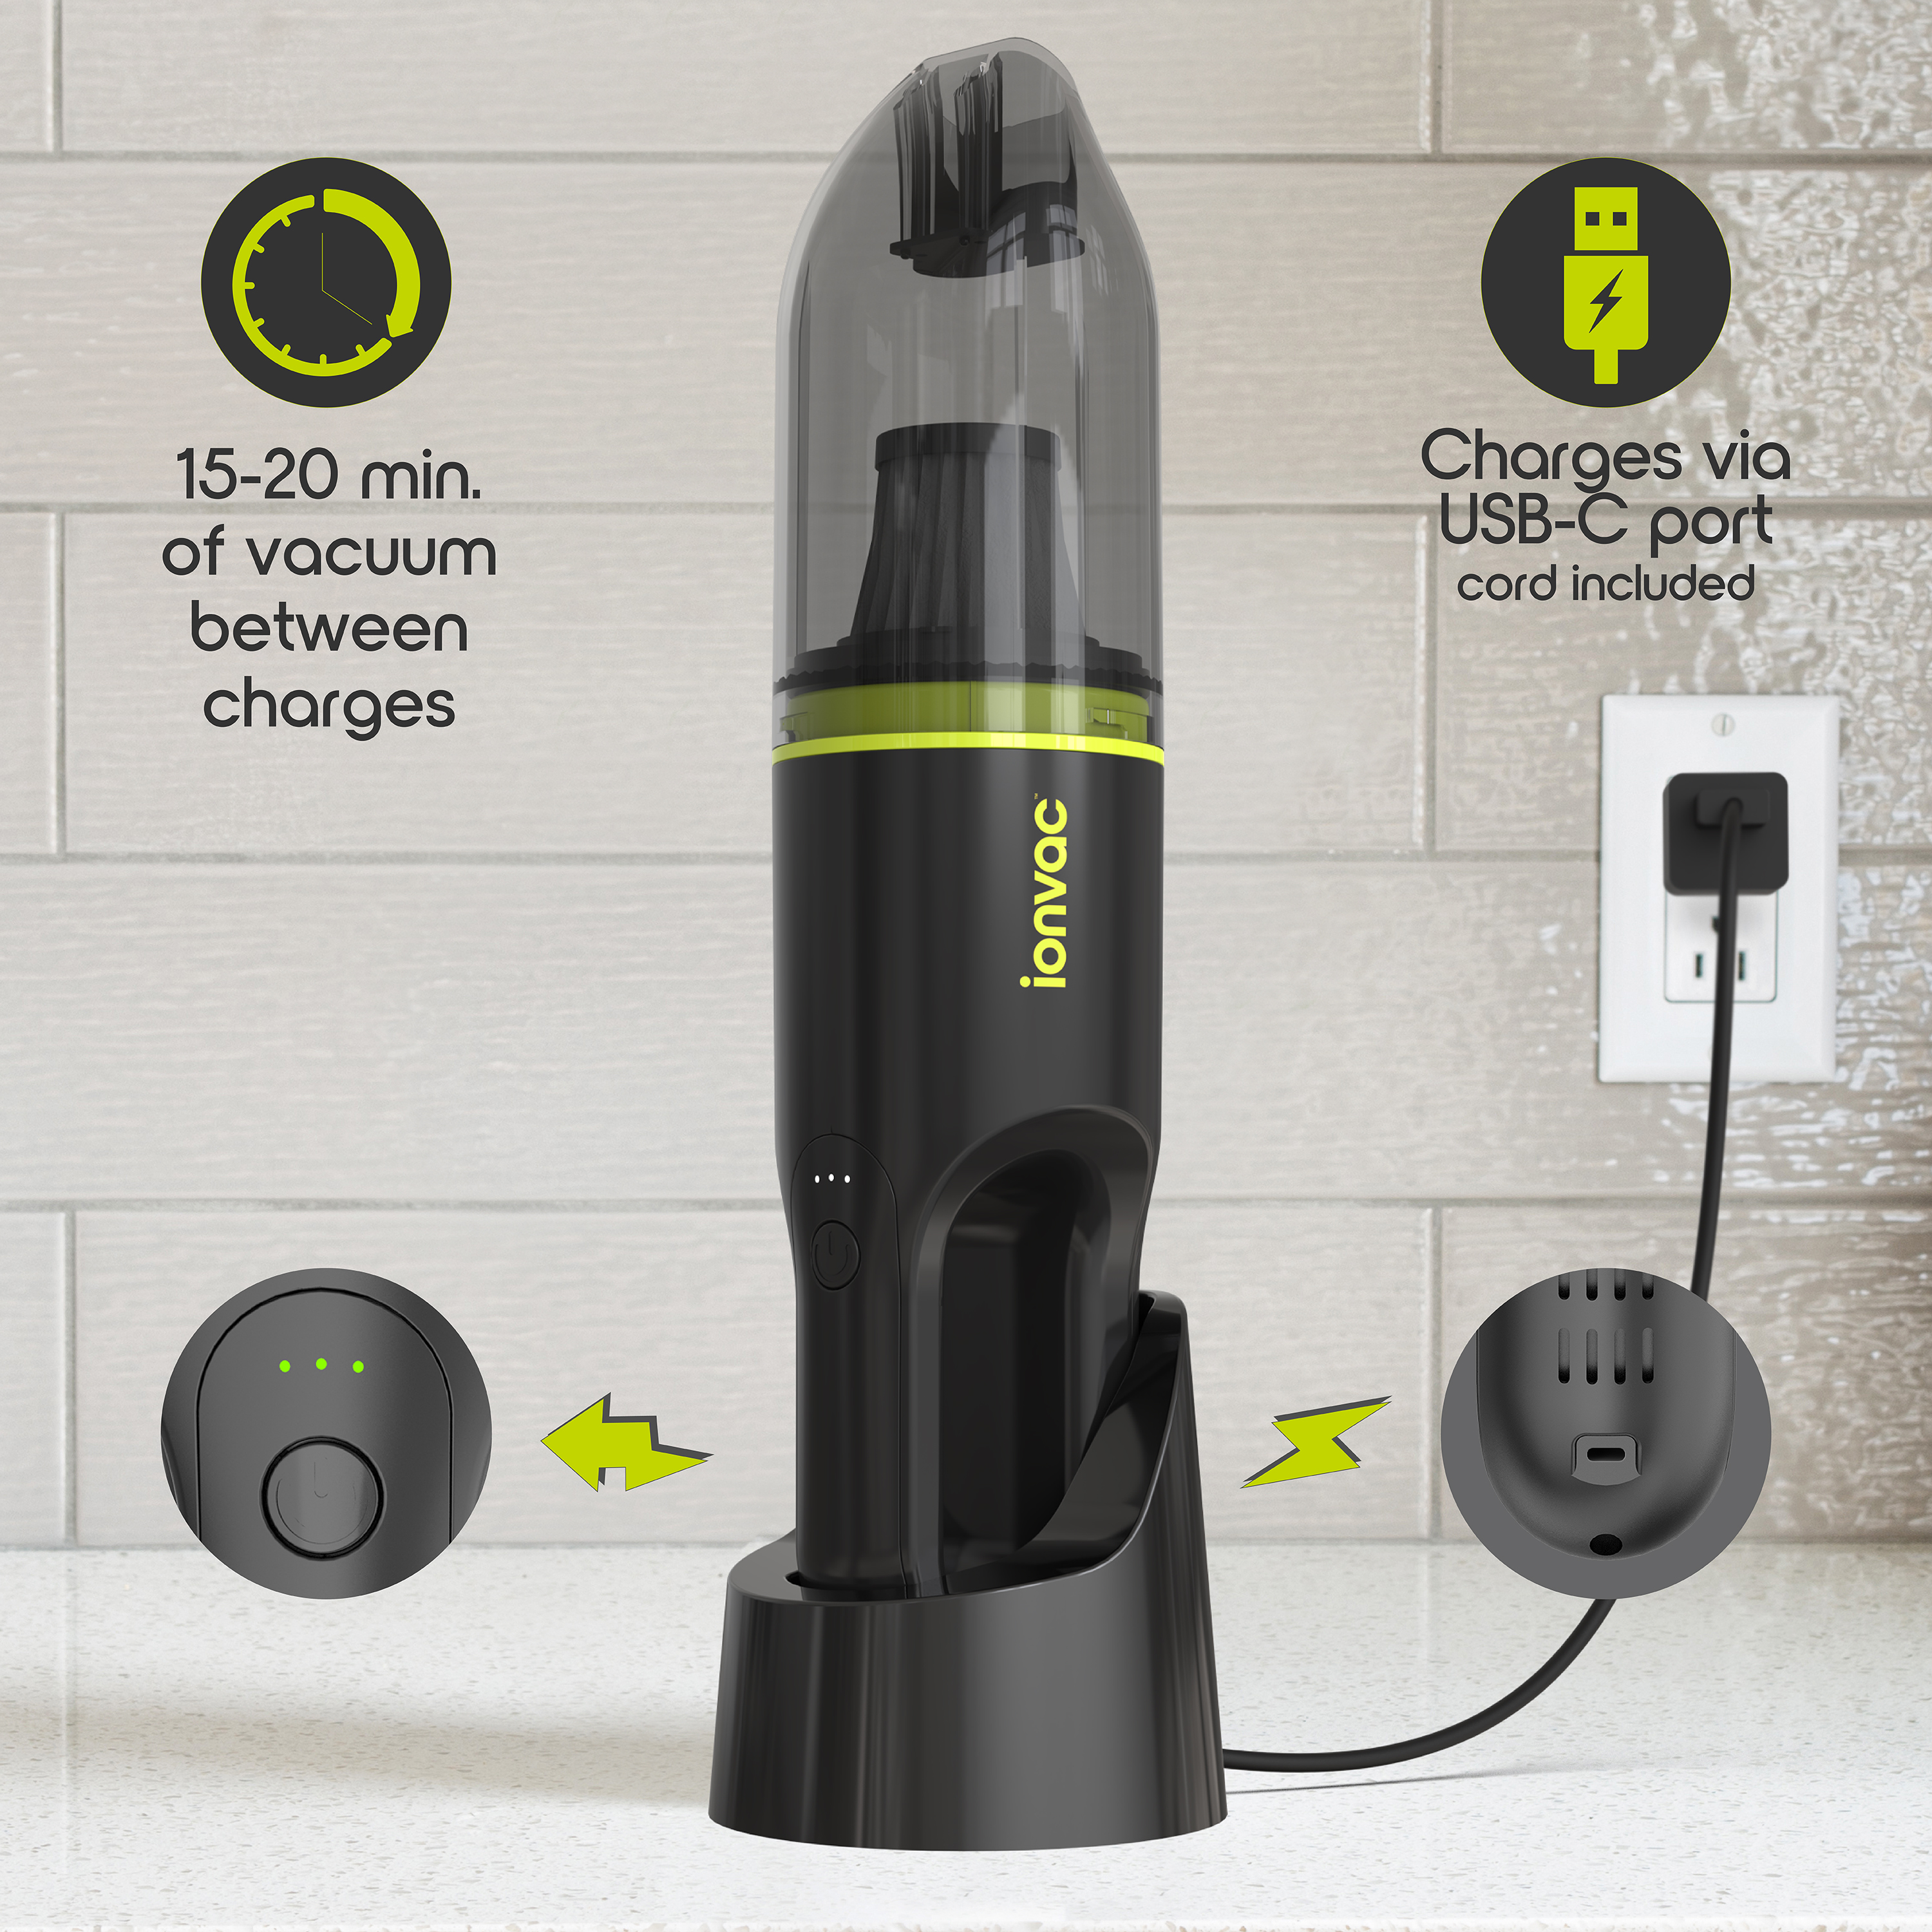 IonVac, Lightweight Handheld Cordless Vacuum Cleaner, USB Charging, Multi-Surface, New - image 5 of 13